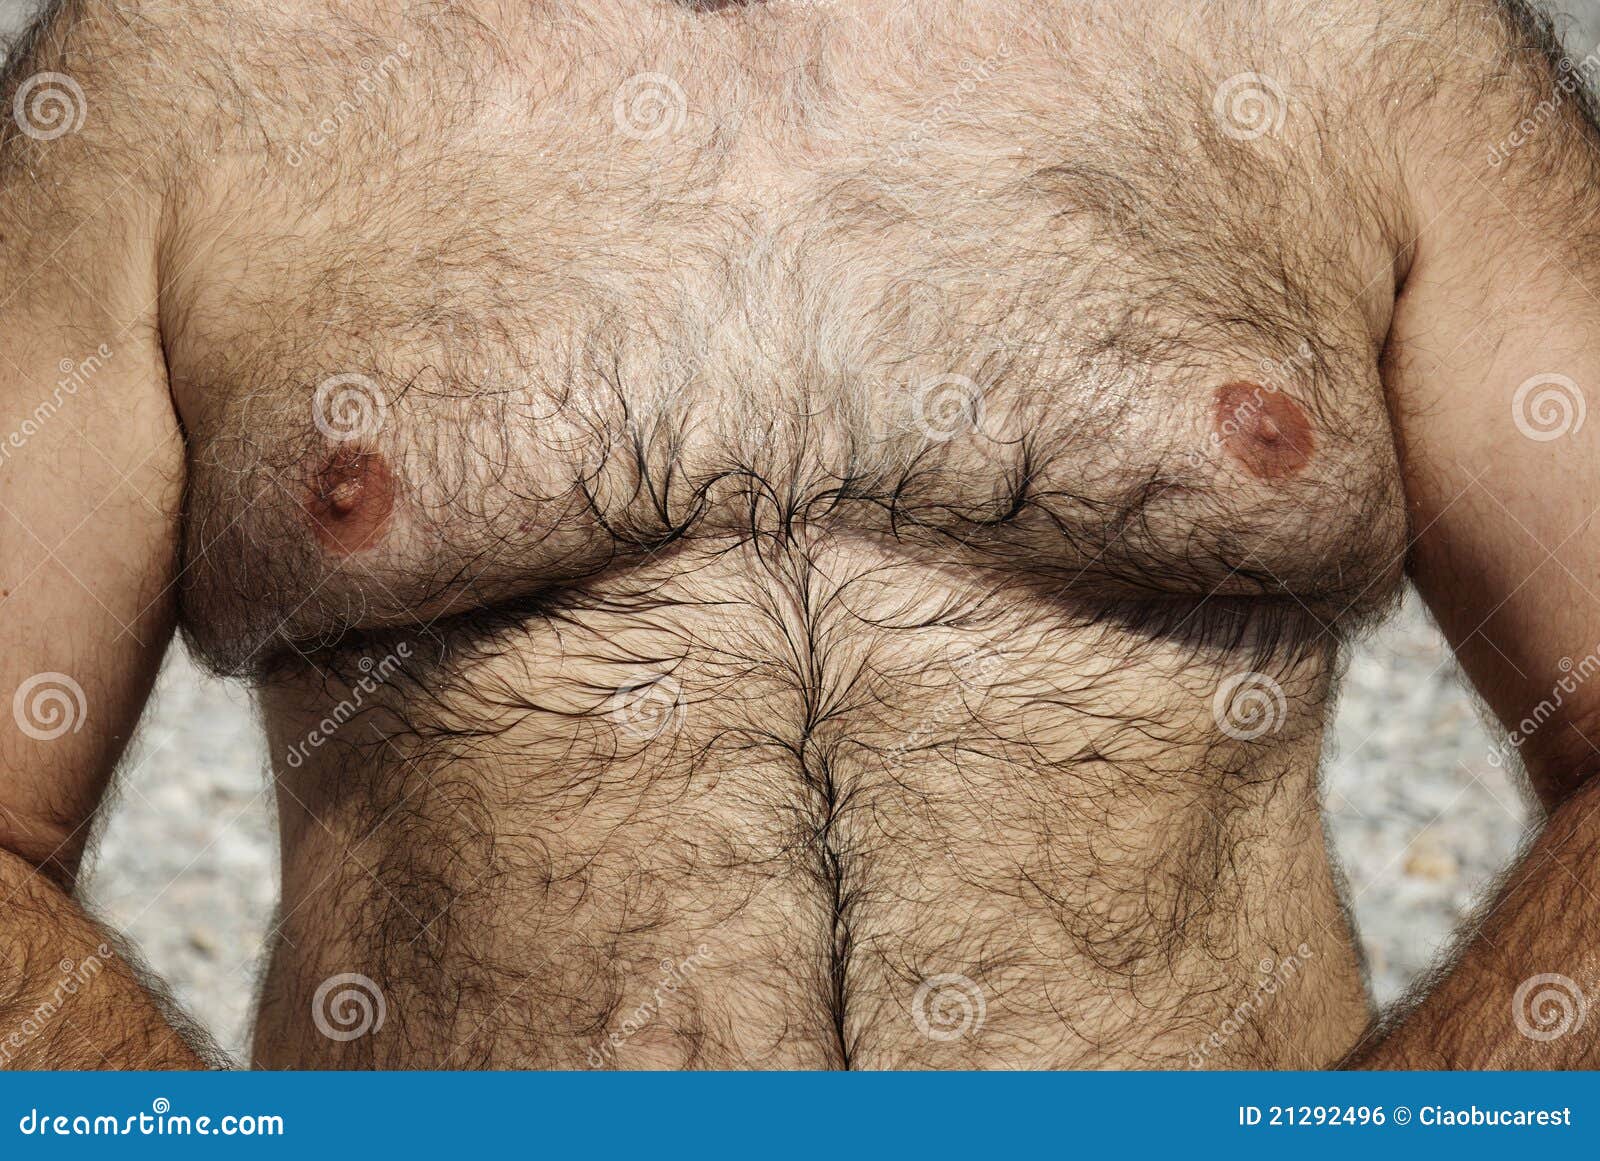 80+ Overweight Senior Adult Men Hairy Stock Photos,